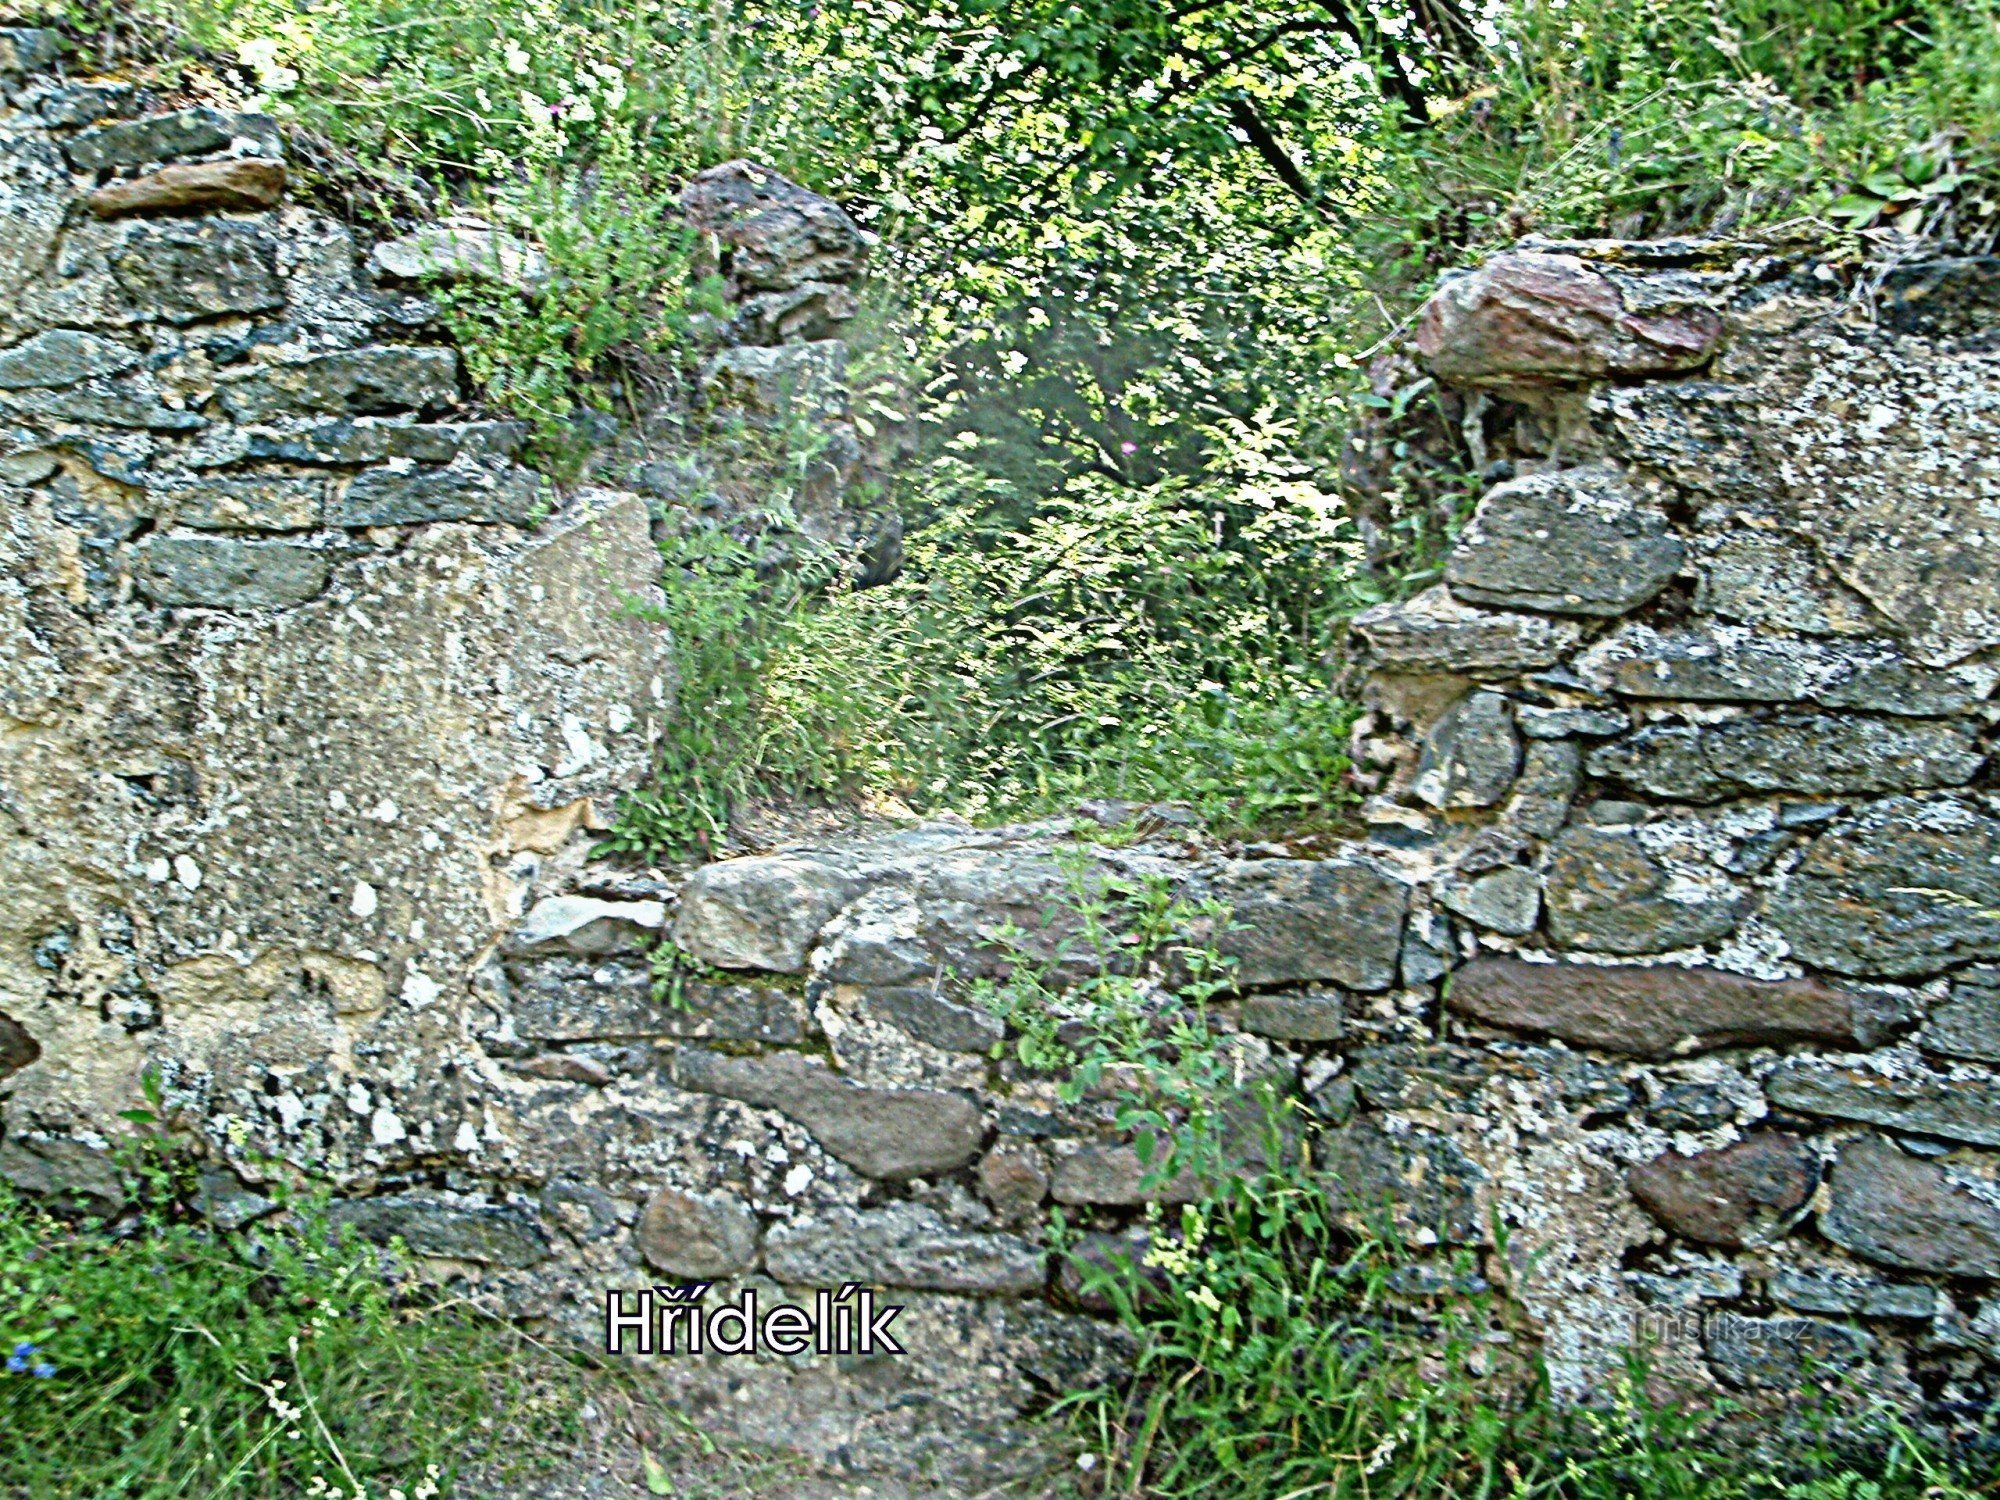 Blíževedly - ruinerna av slottet Hřídelík